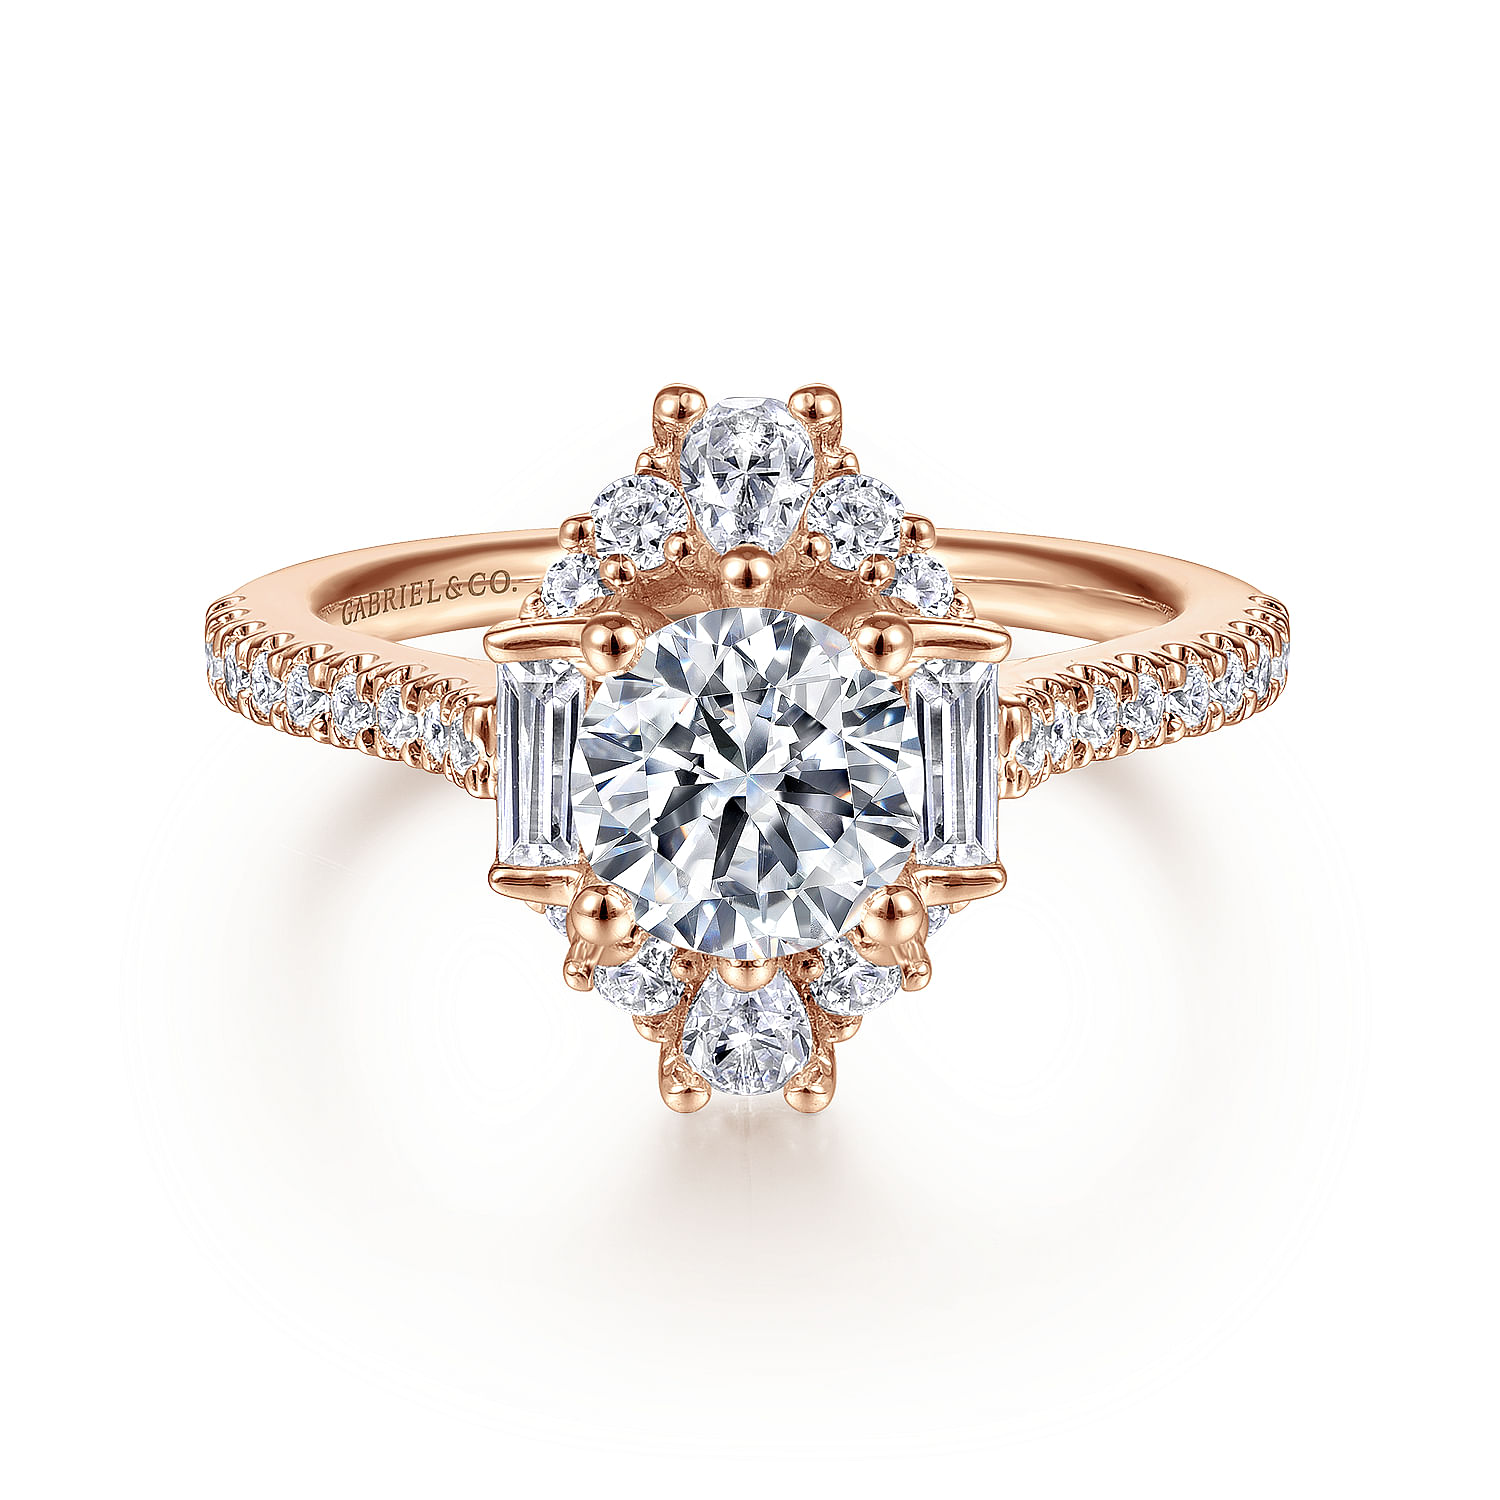 Carrington - Unique 14K Rose Gold Art Deco Halo Diamond Engagement Ring